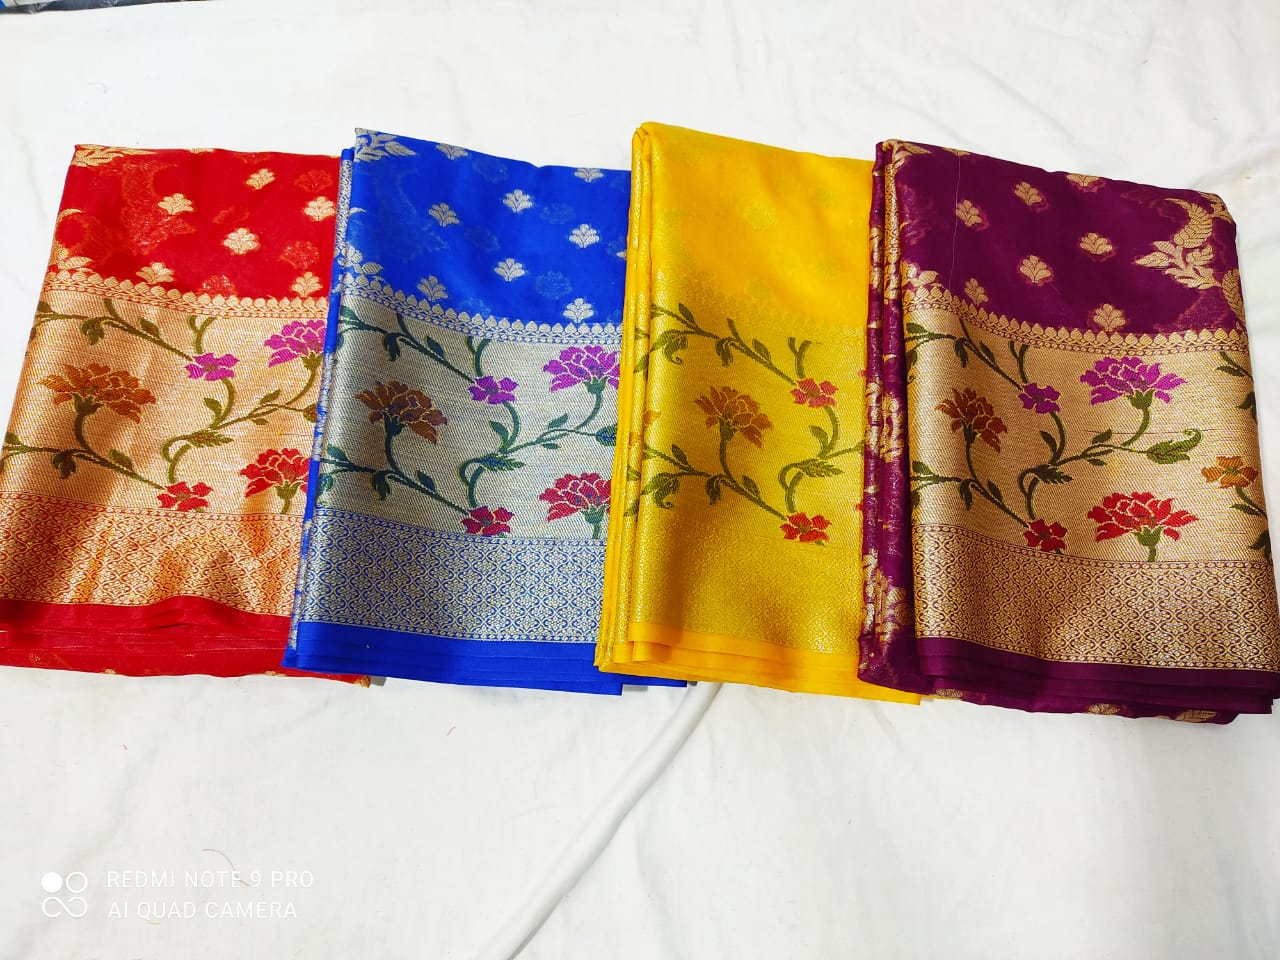 Rahman fabrics